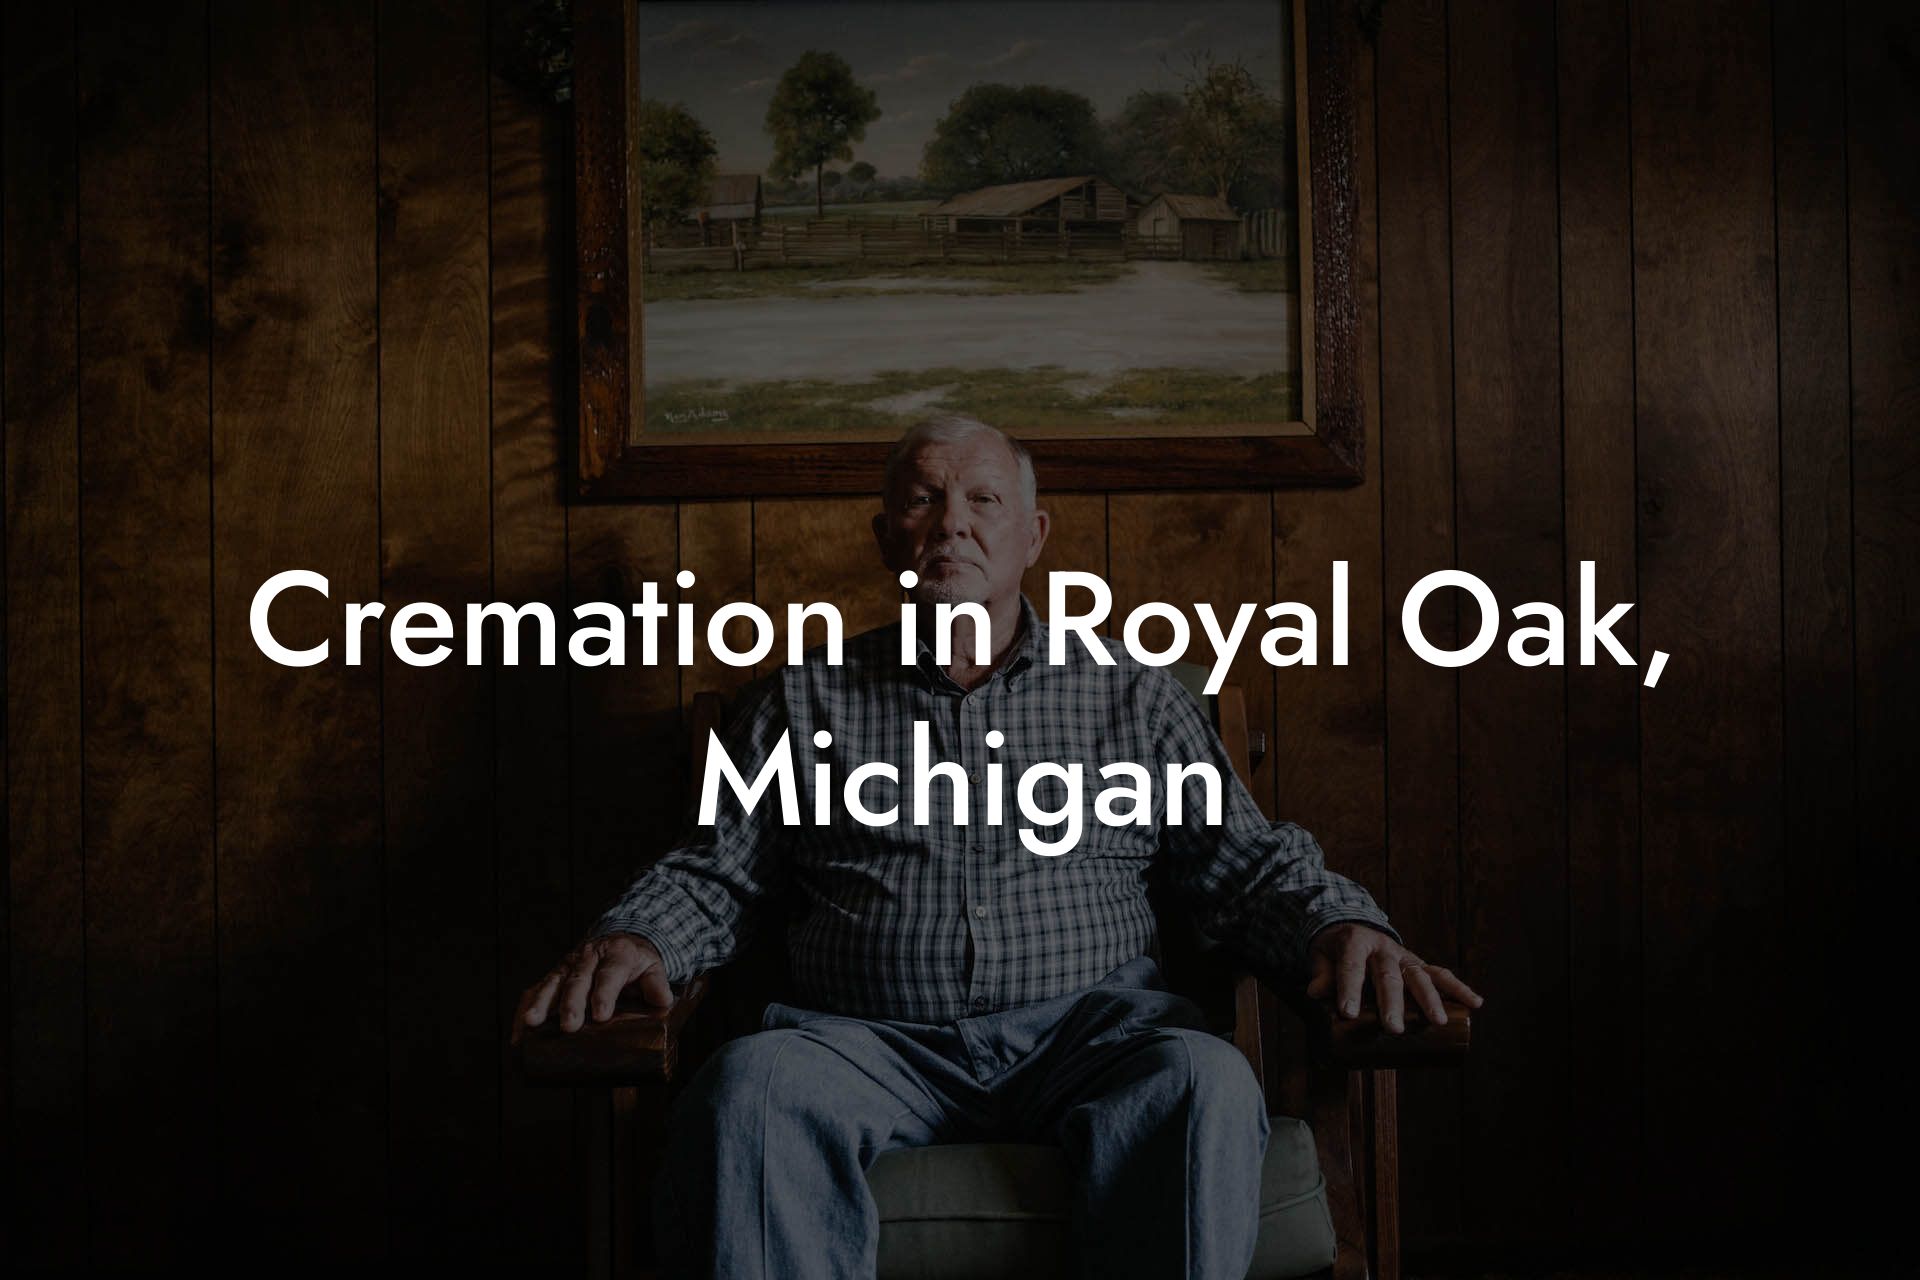 Cremation in Royal Oak, Michigan